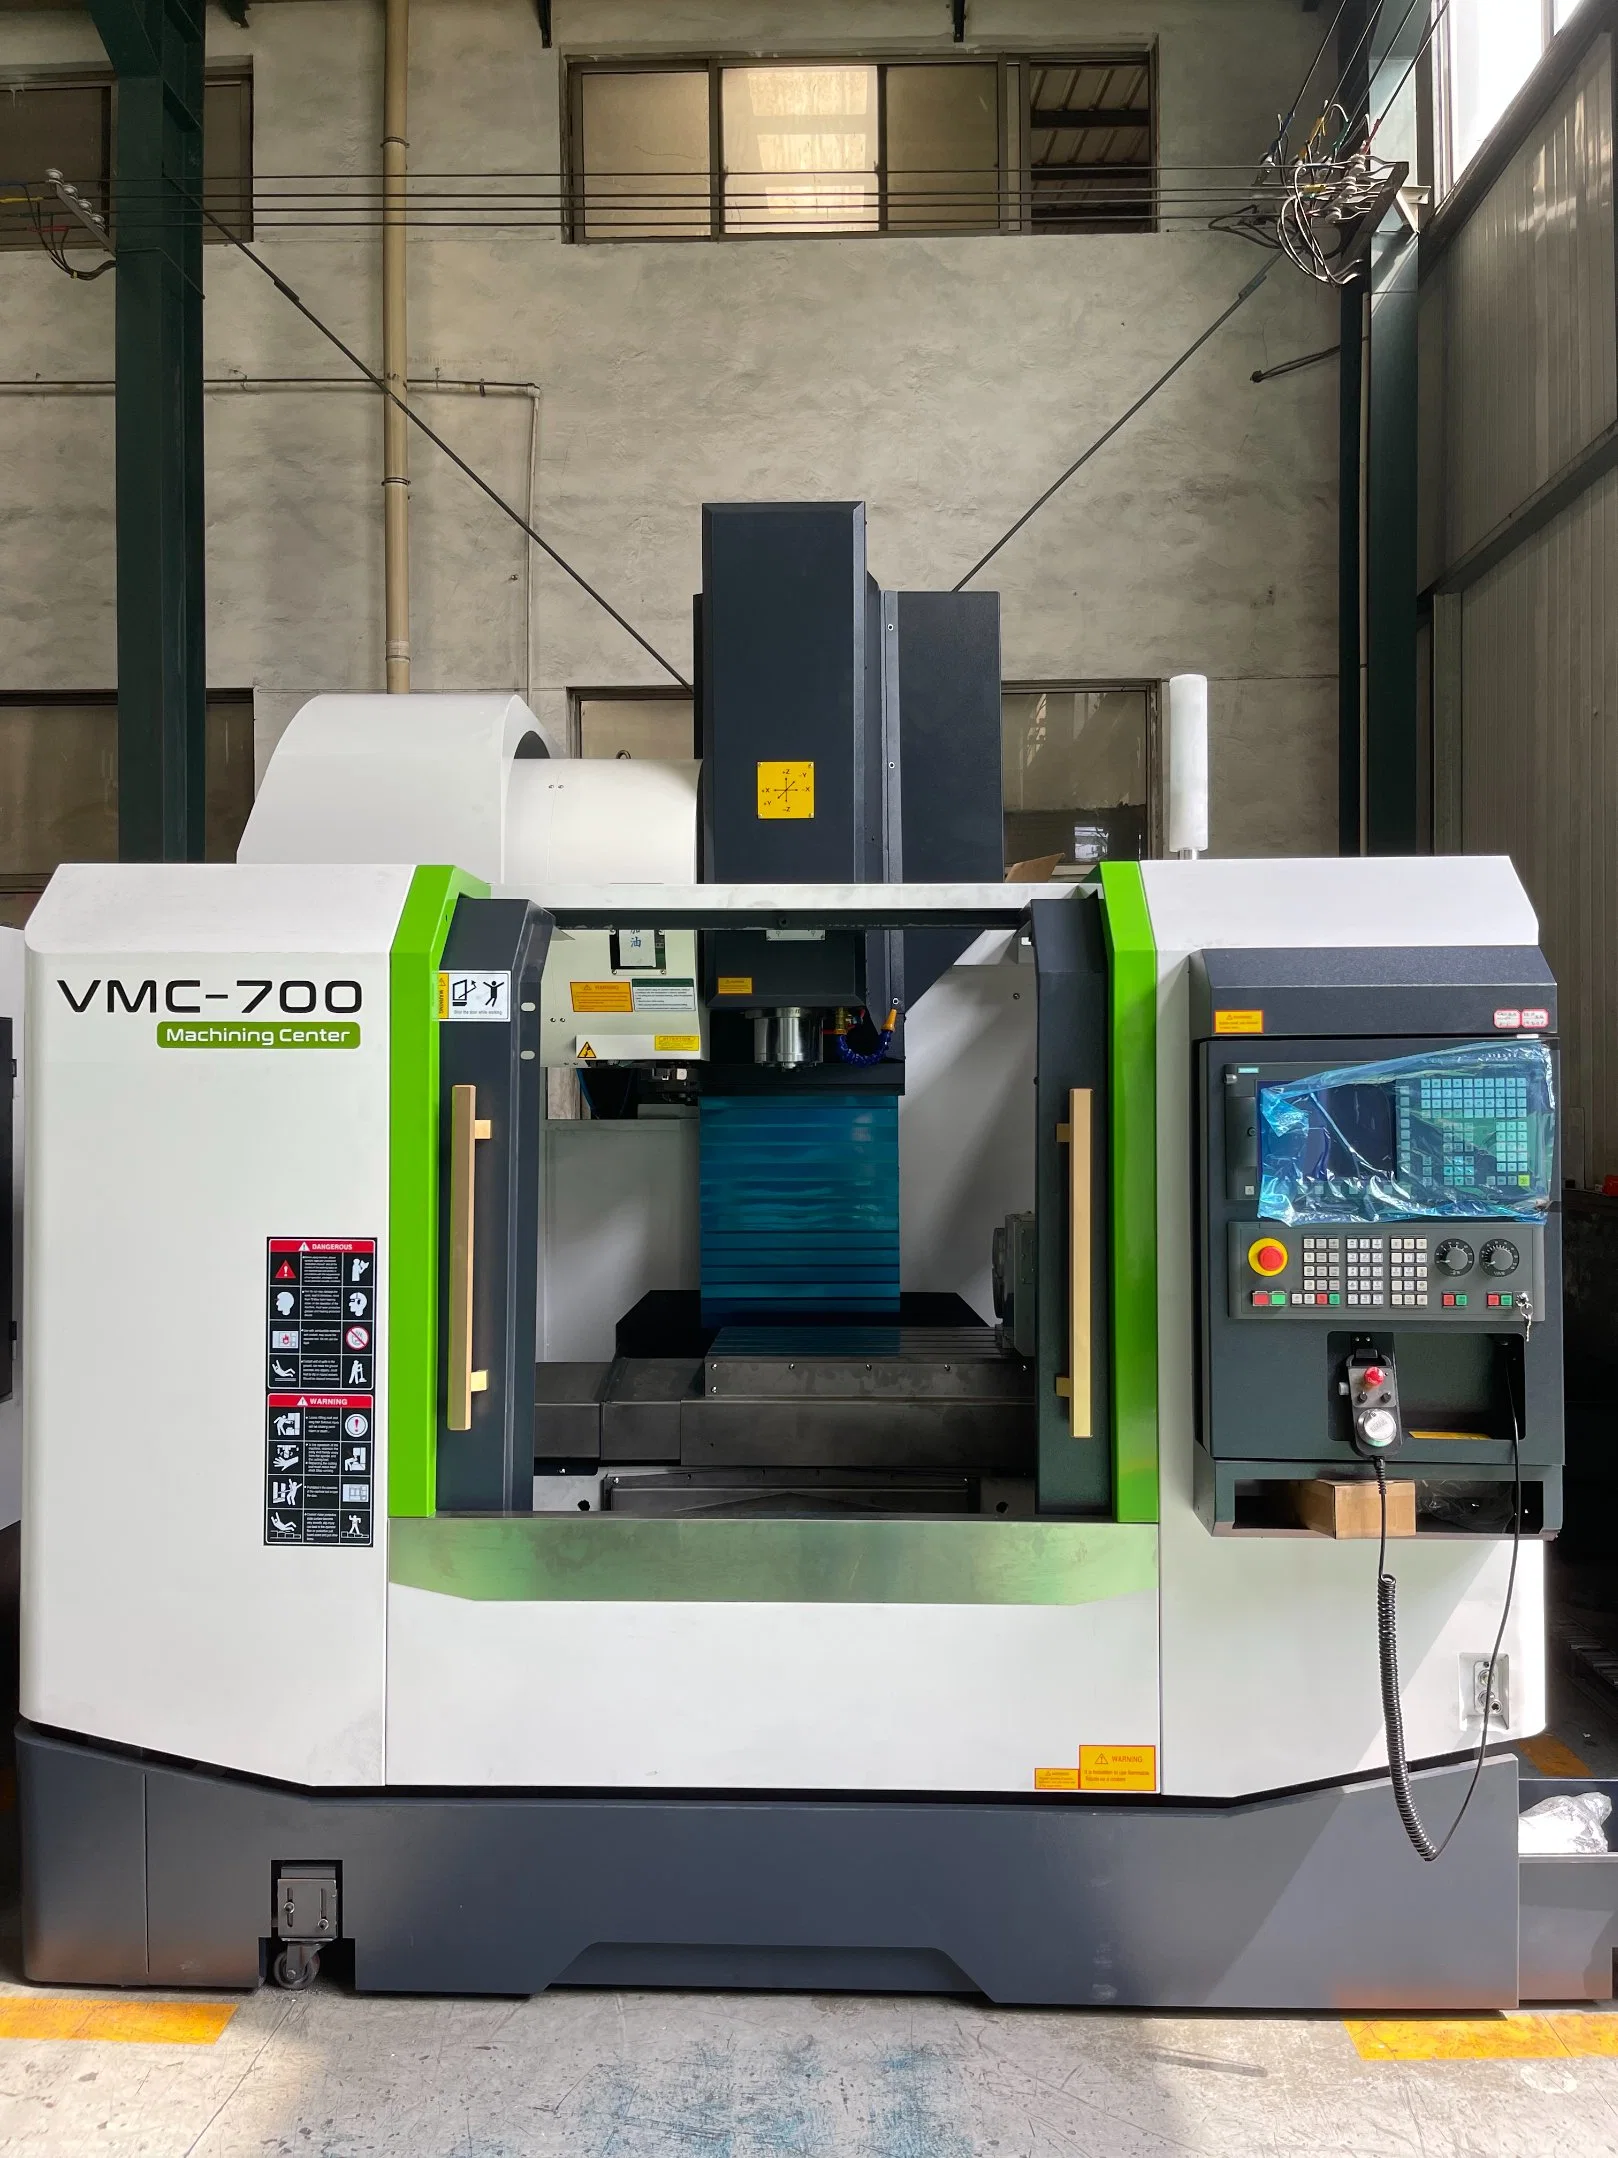 CNC Milling Machine Vmc700 Fanuc Control System Vmc850 Vmc1160